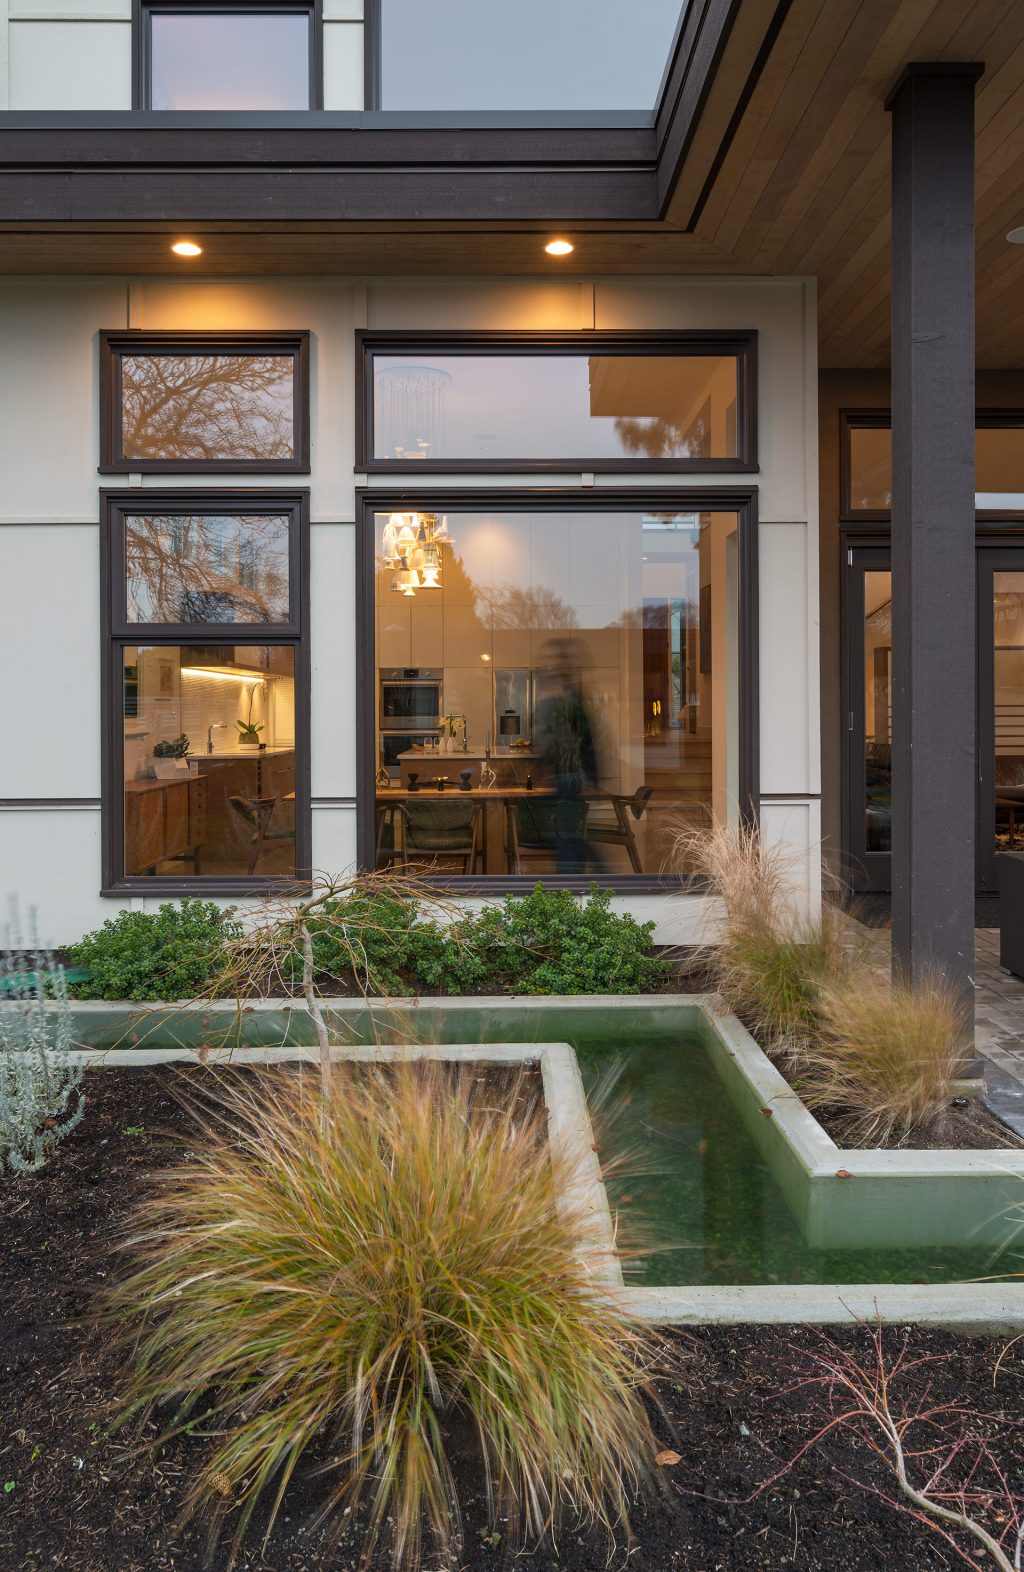 West Coast Modern Home Wears Casual Midcentury Vibe – Modern Home